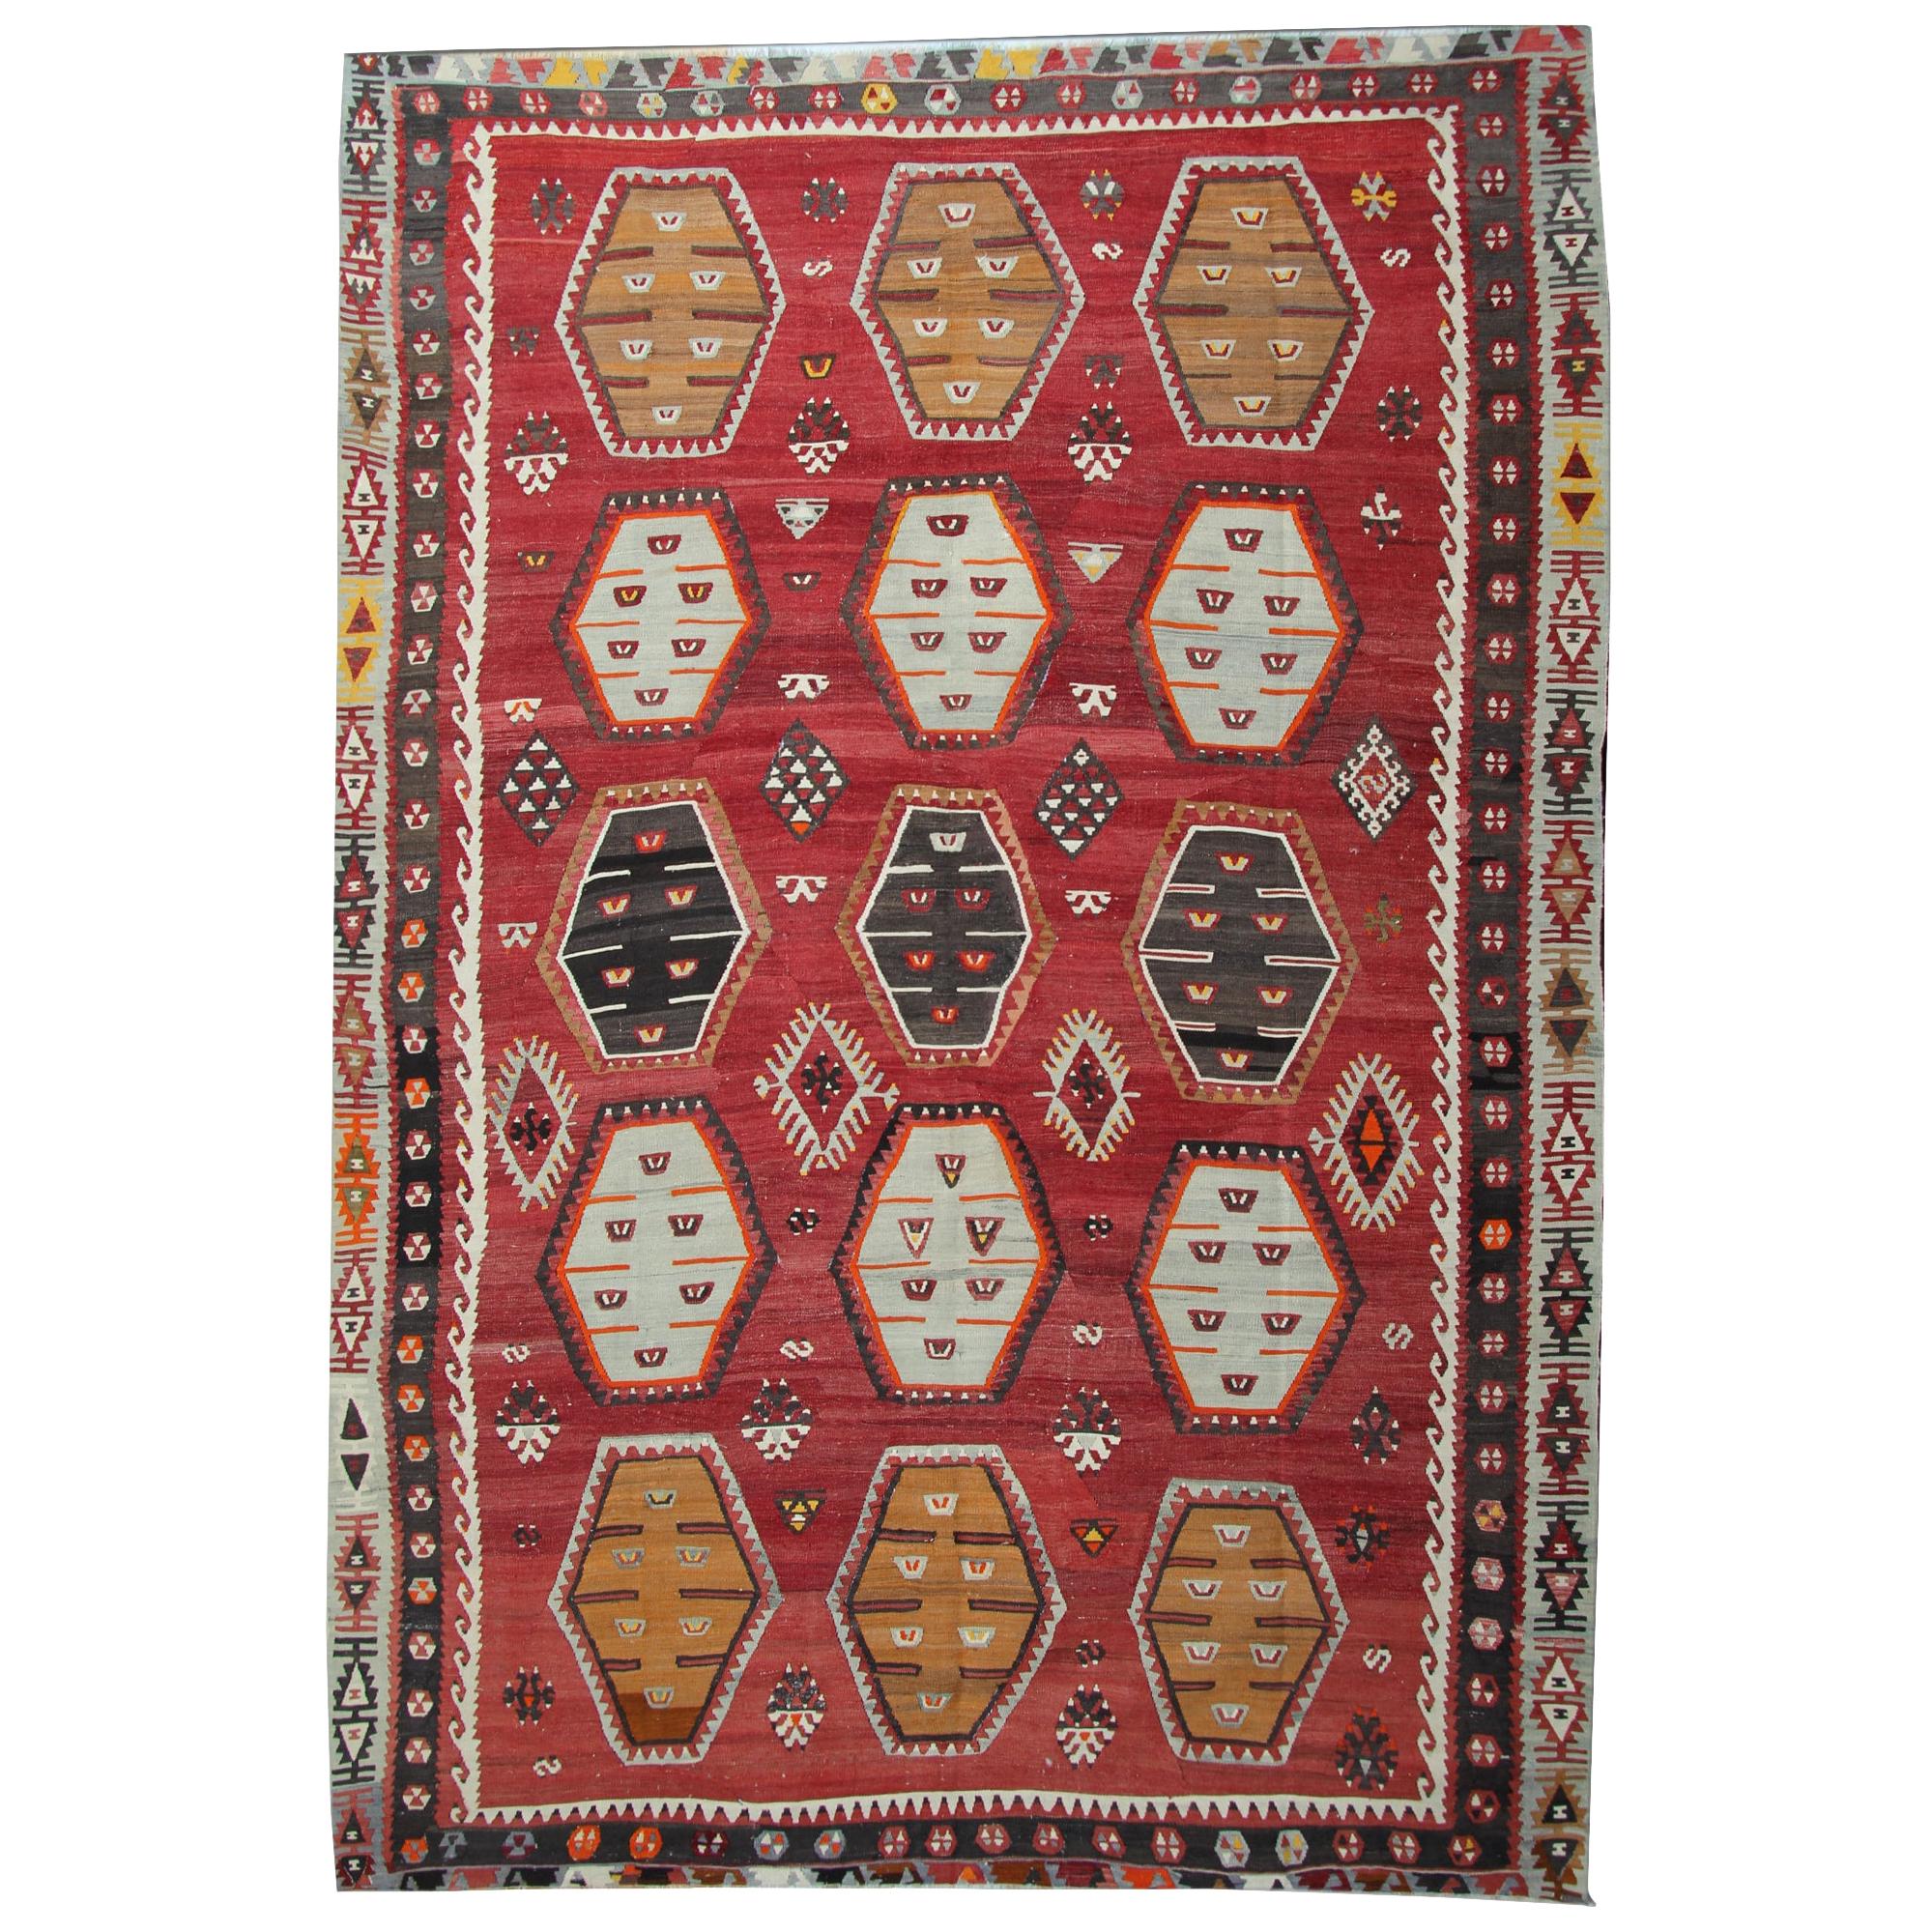 Antique Rugs, Red Kilim Rugs Sarkisla Carpet Turkish Rugs for Sale